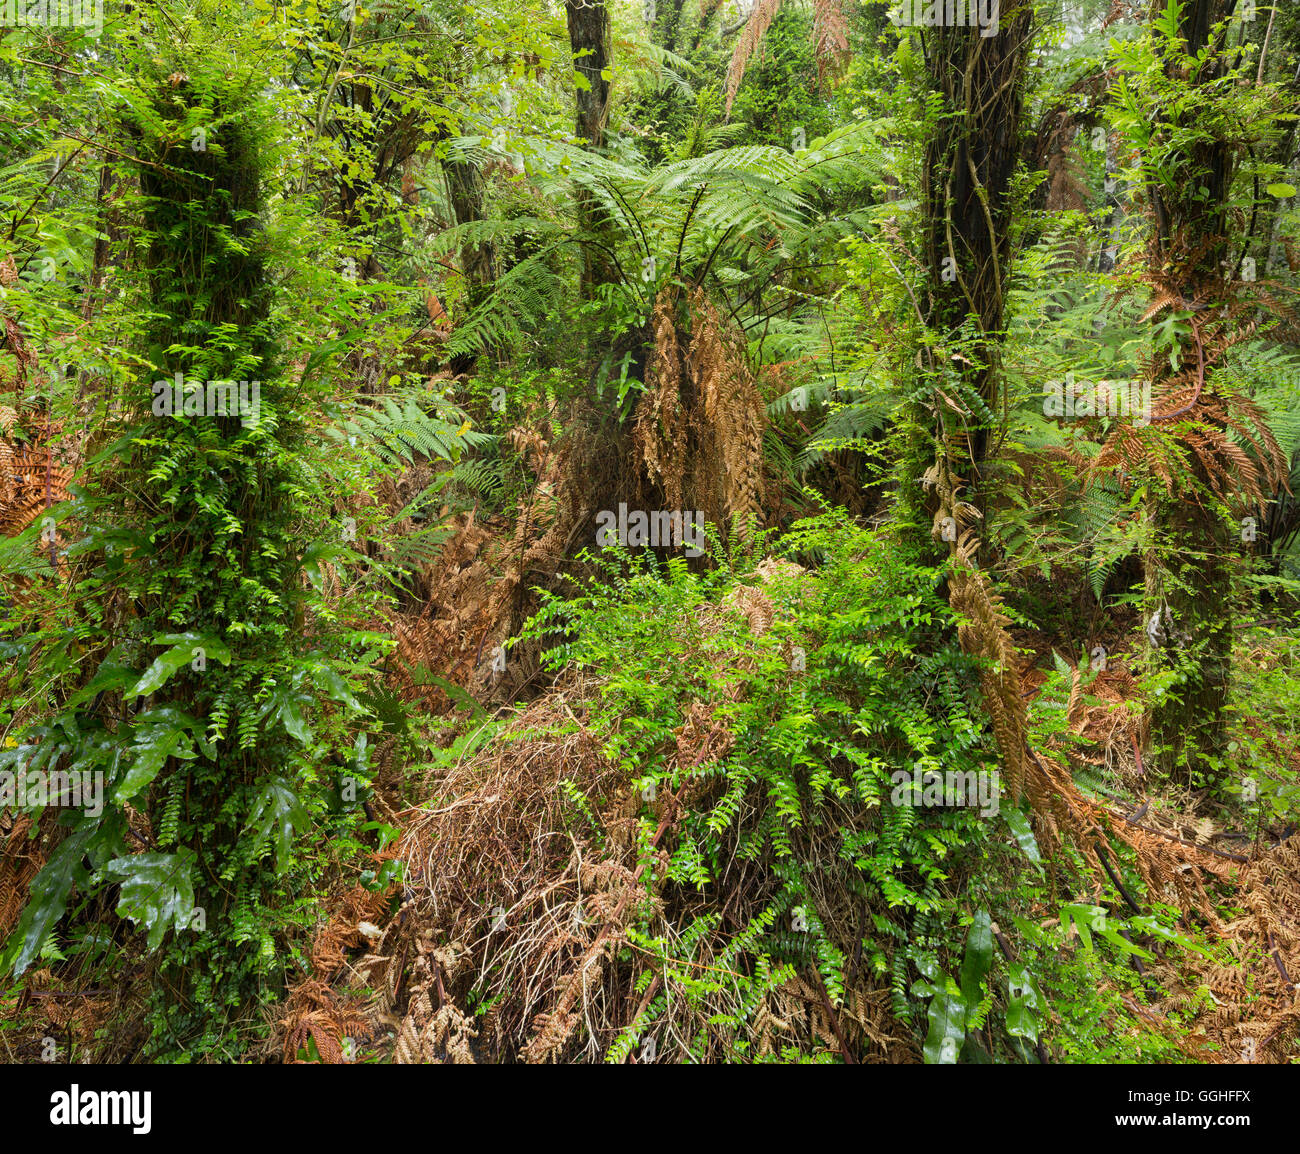 Papatowai Top Track, Wald und Farne, Otago, Südinsel, Neuseeland Stockfoto